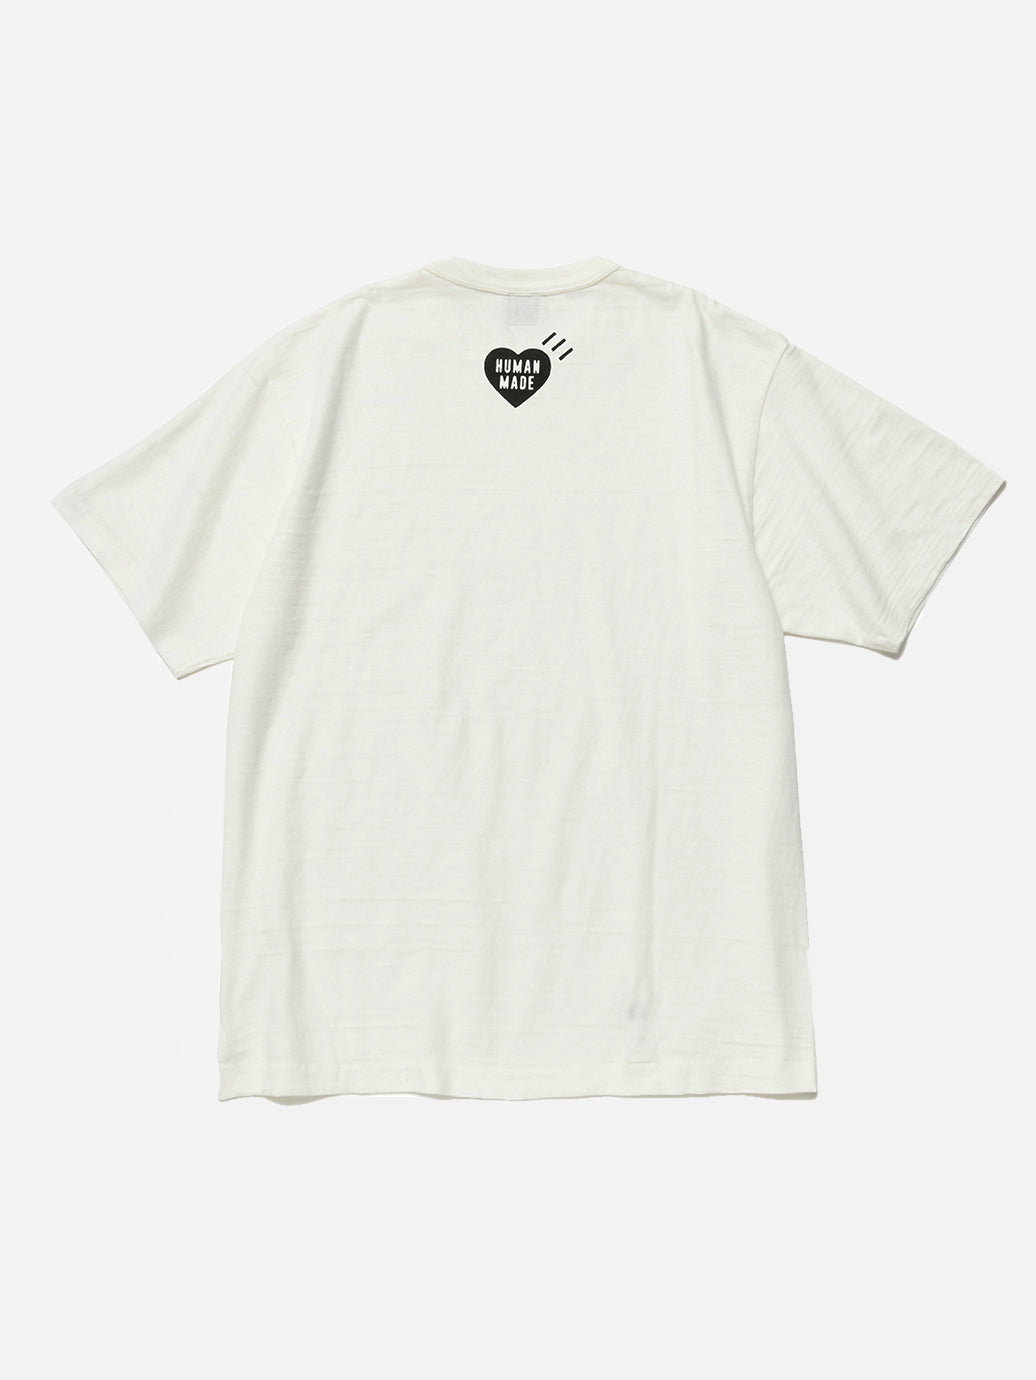 Human Made Graphic T-Shirt #10